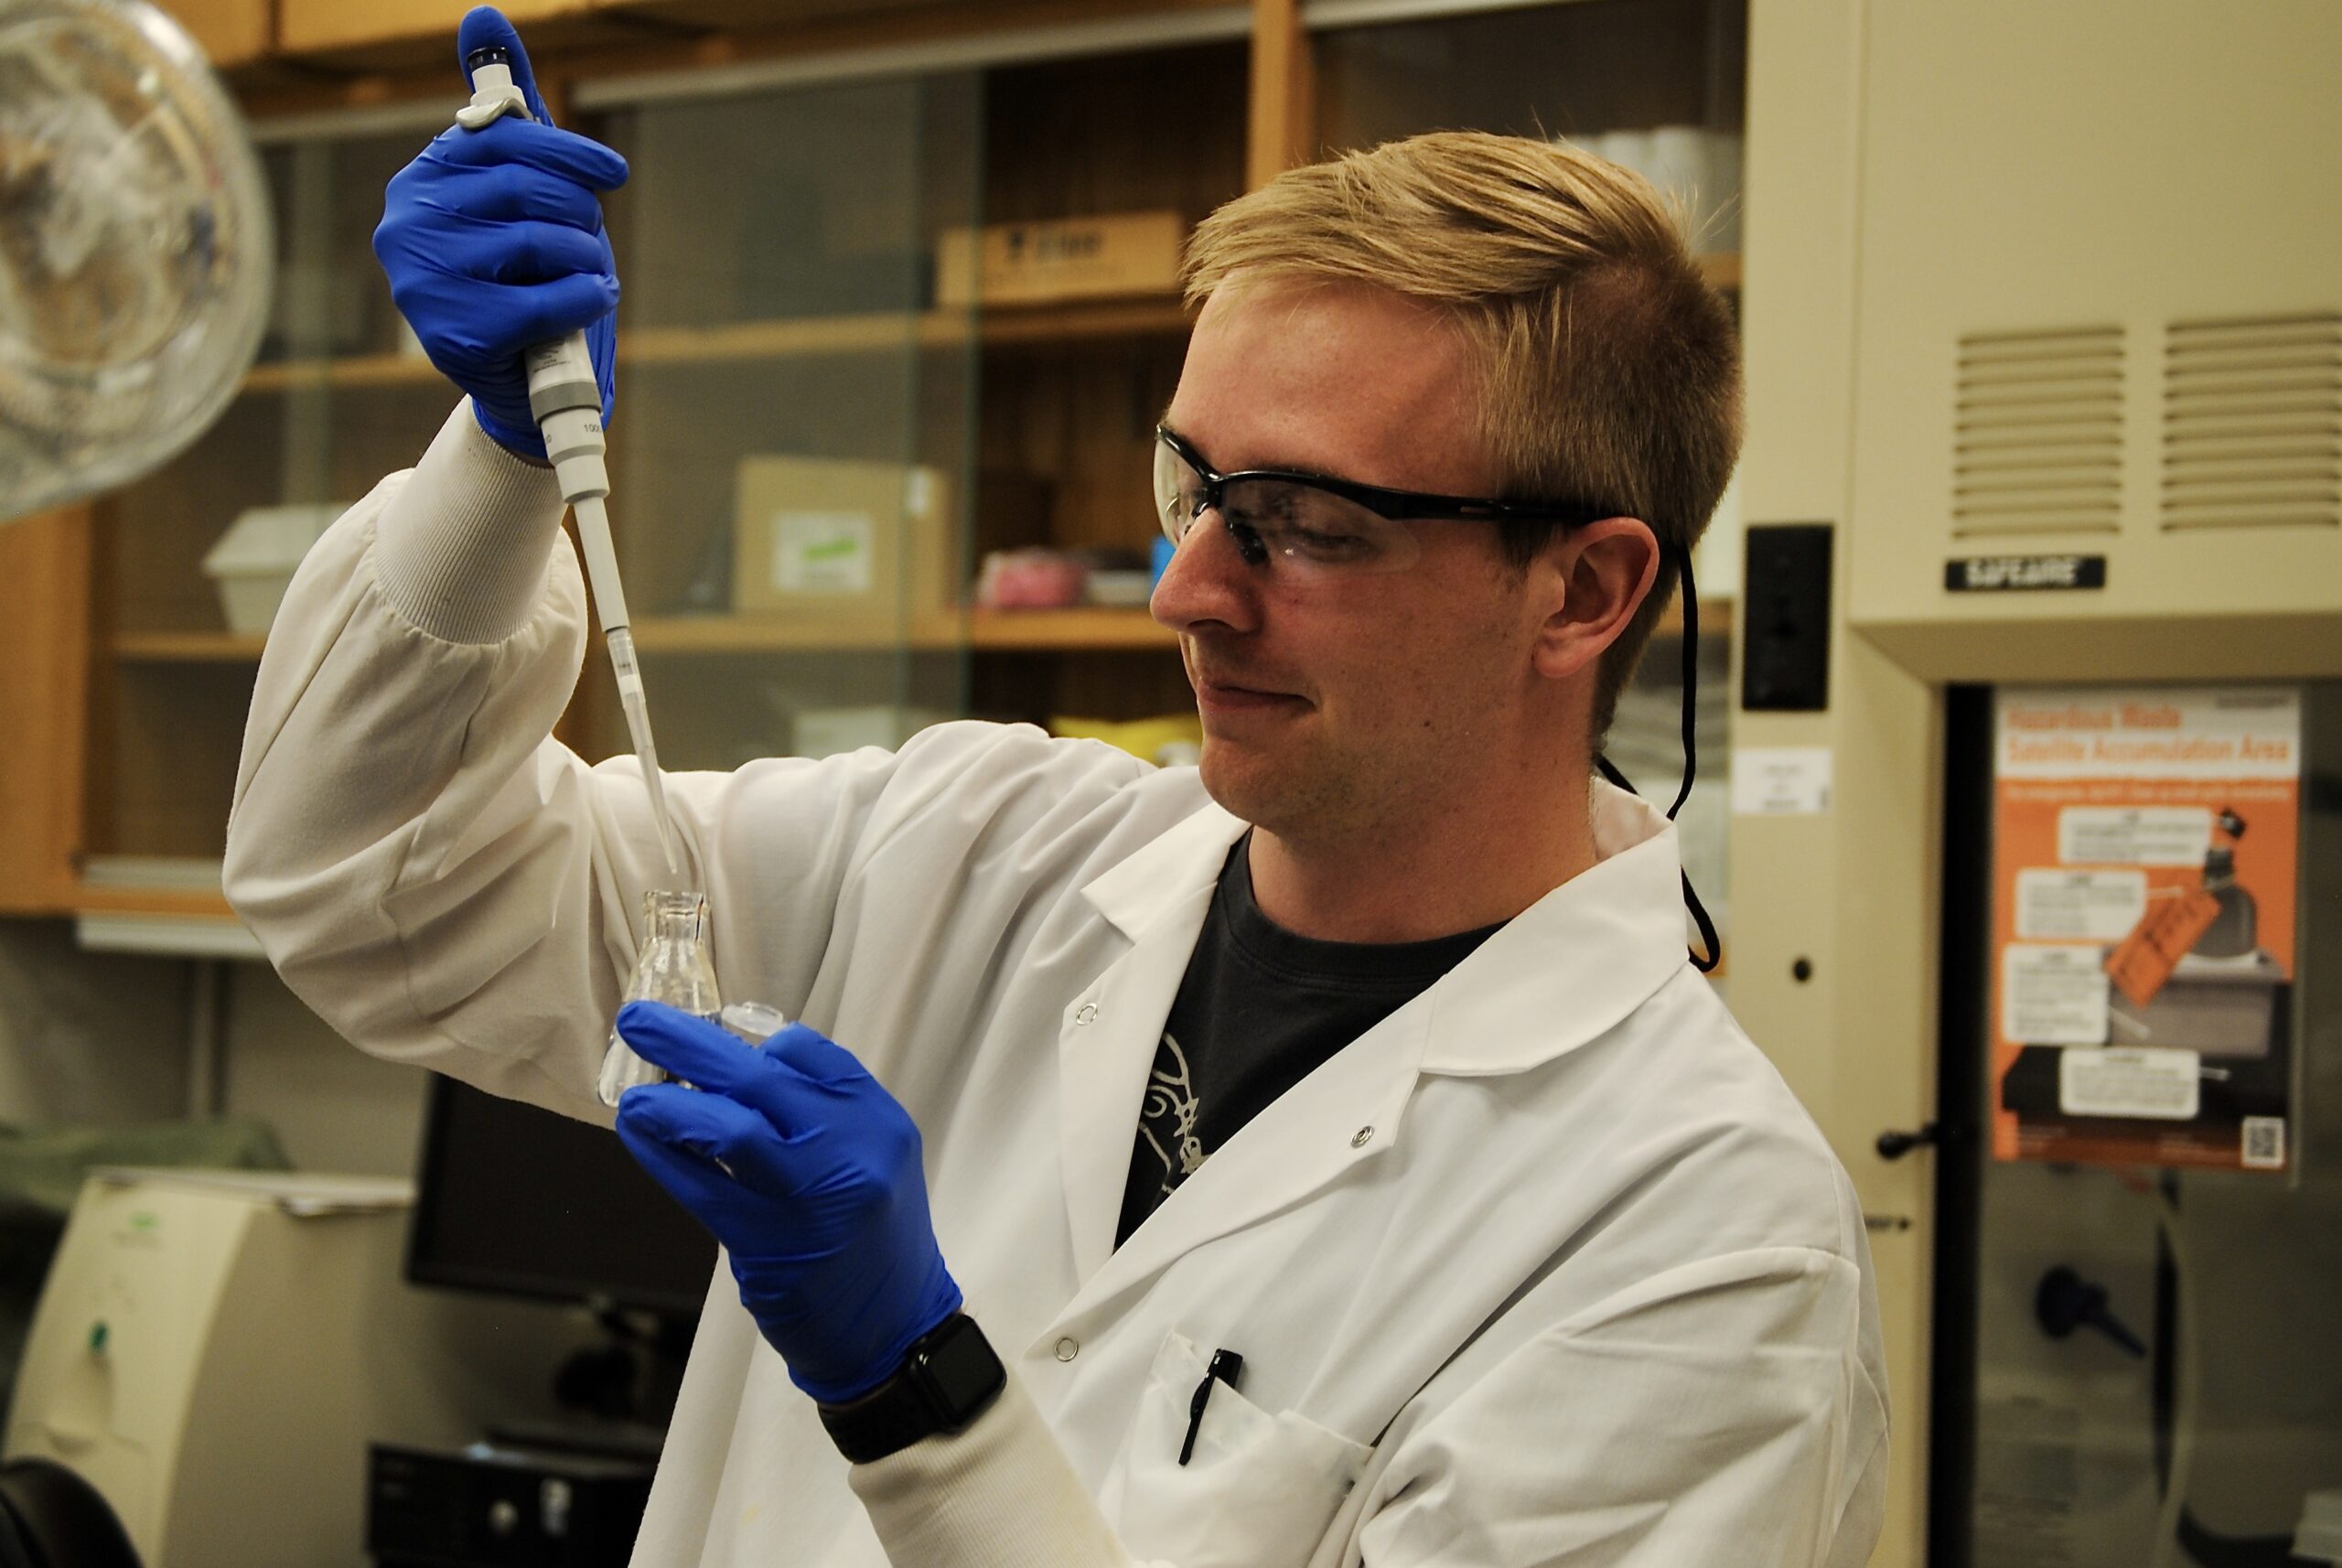 Graduate student in lab coat taking sample of water.